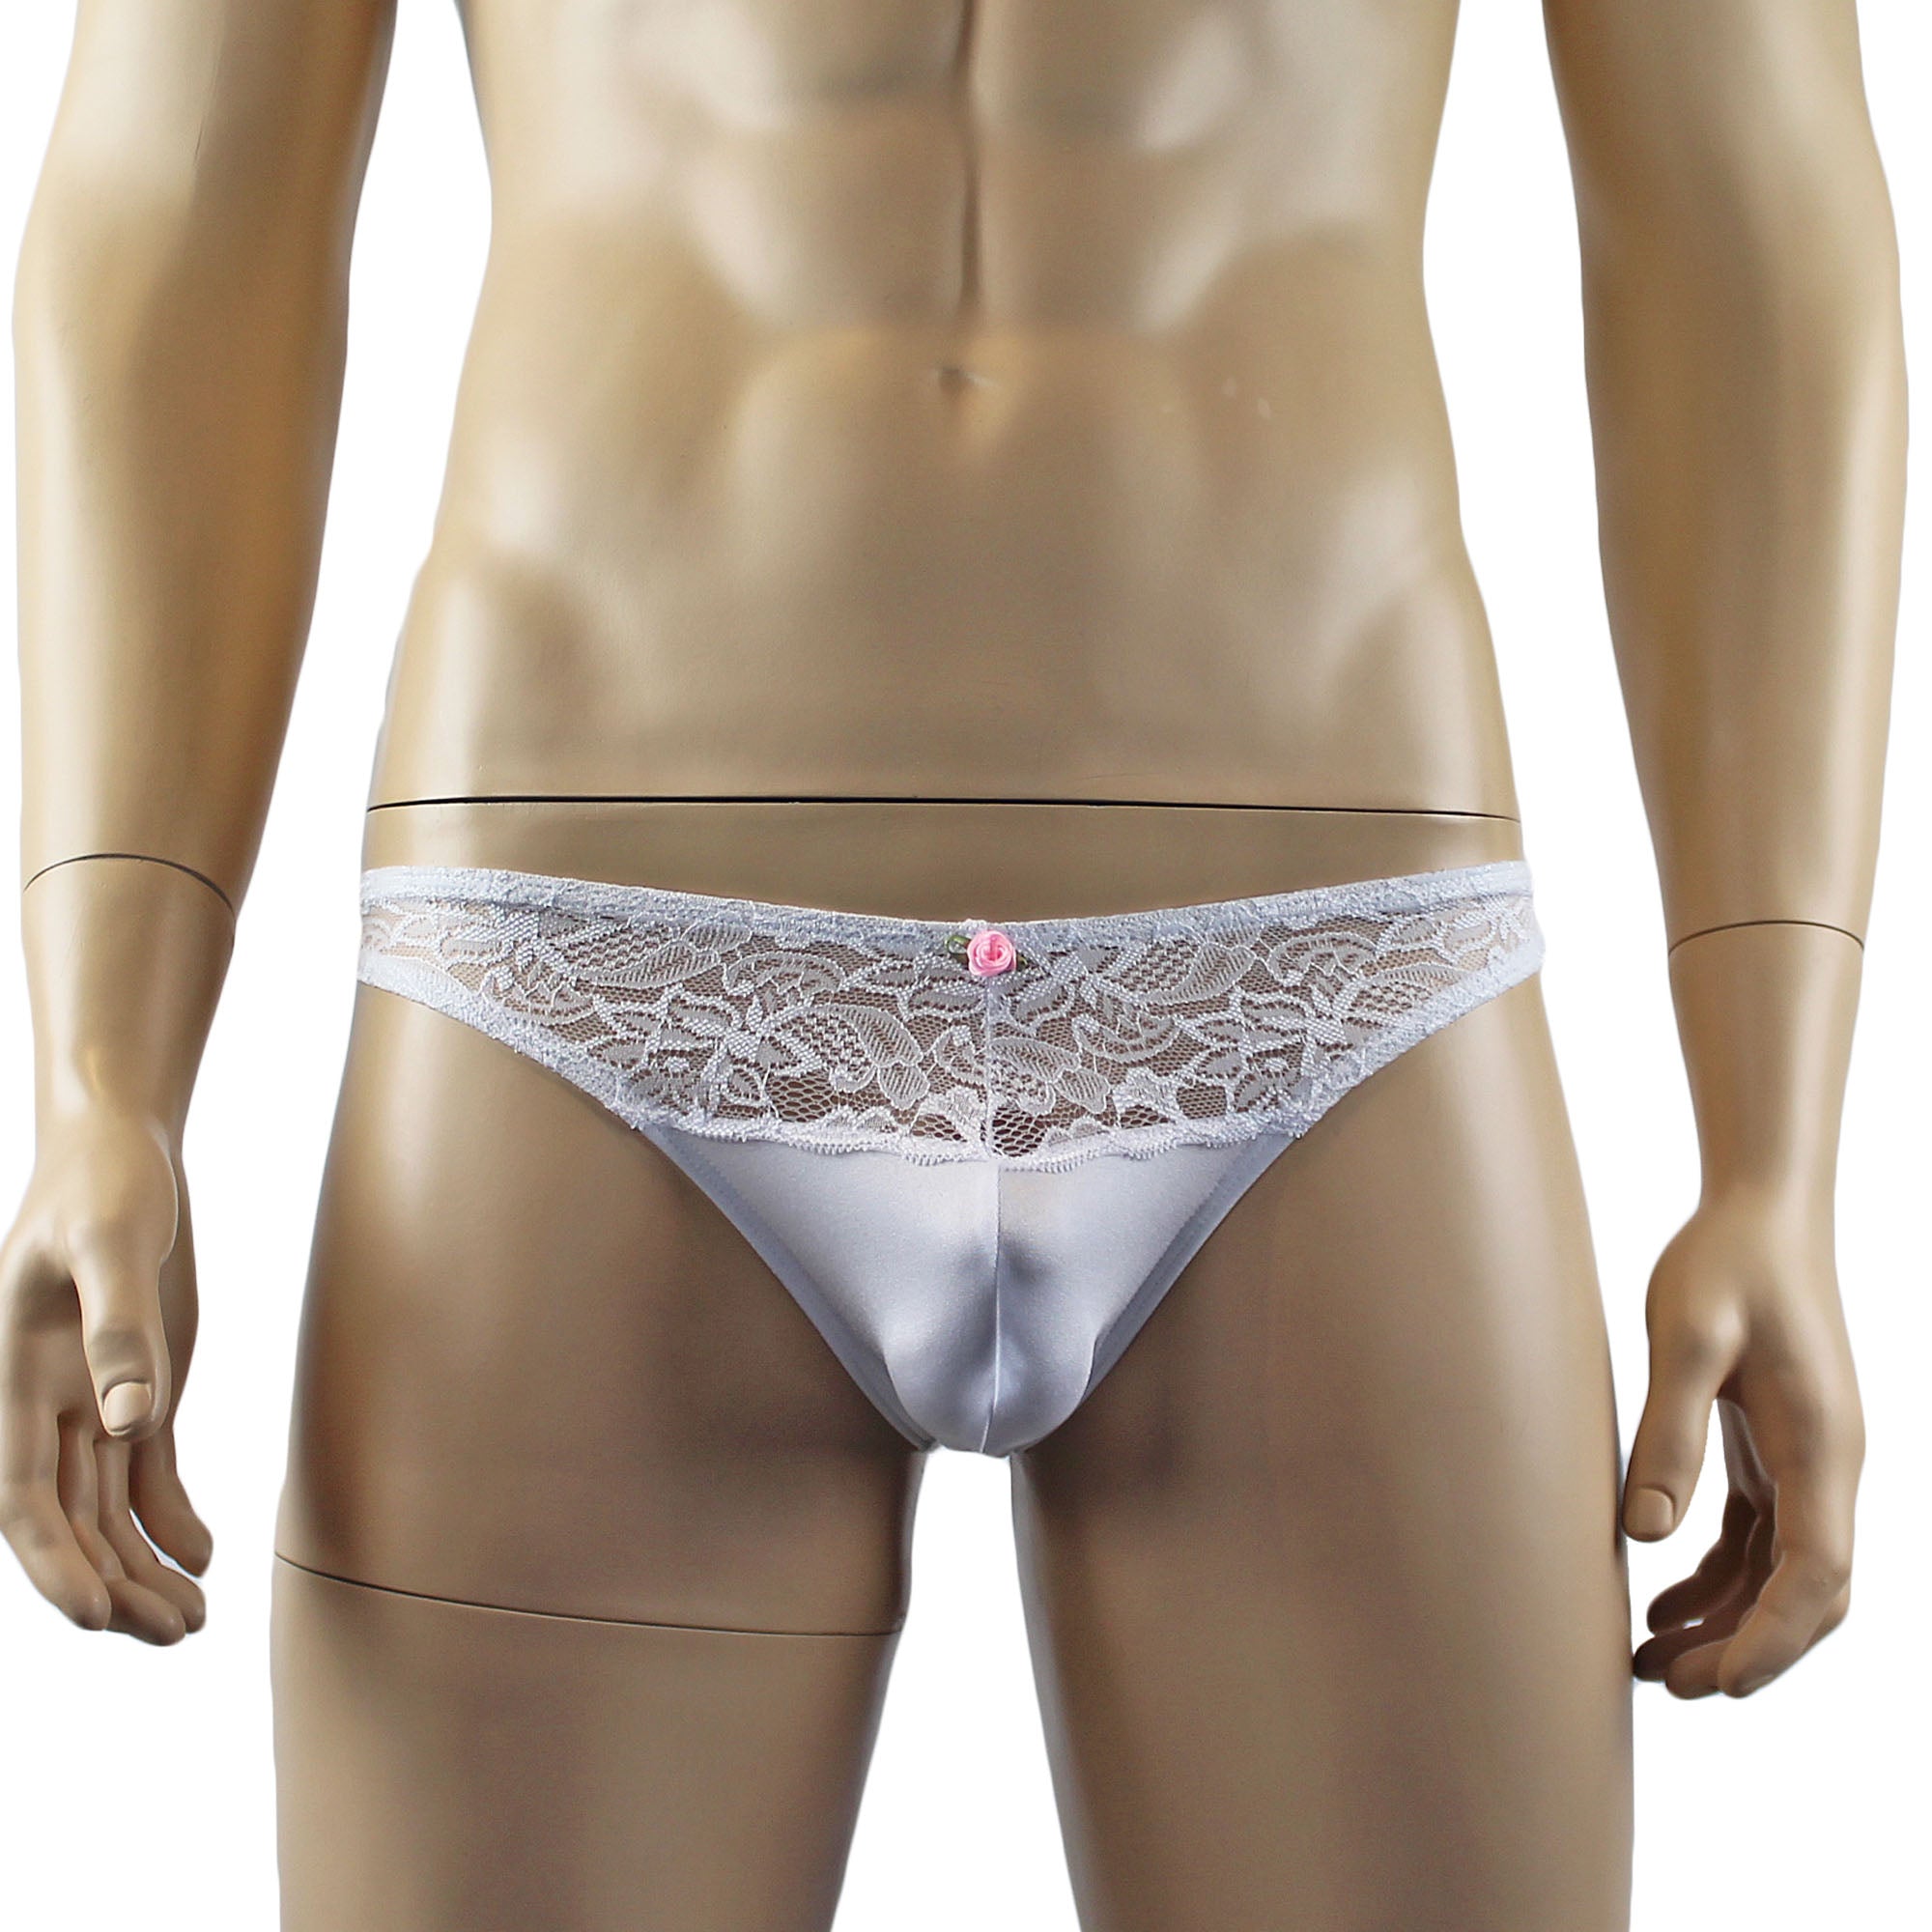 Male Penny Lingerie Bra Top with V Lace front and Capri Bikini White